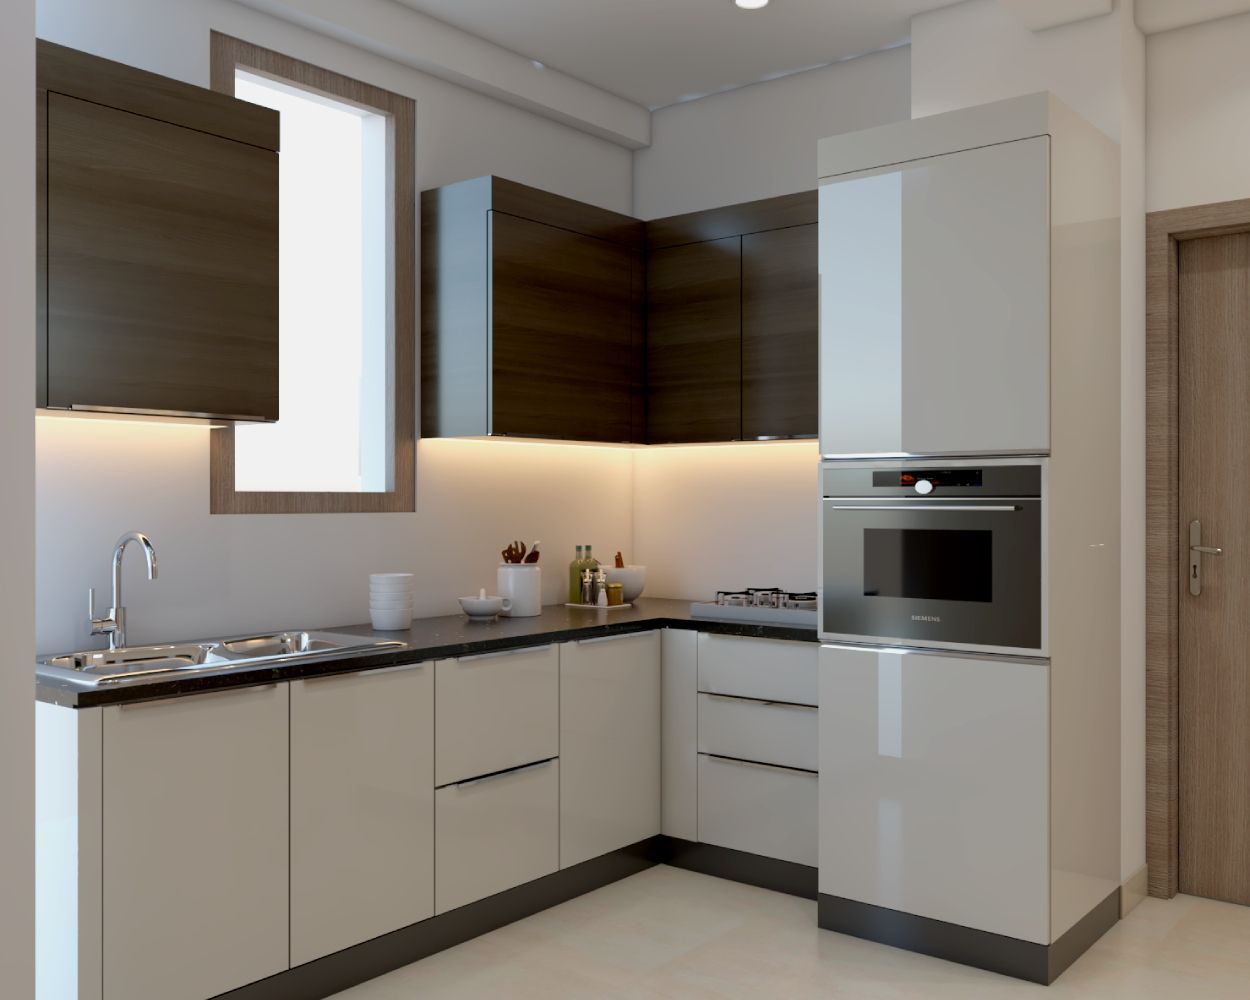 Modern L-Shaped Modular Kitchen Design With A Granite Countertop